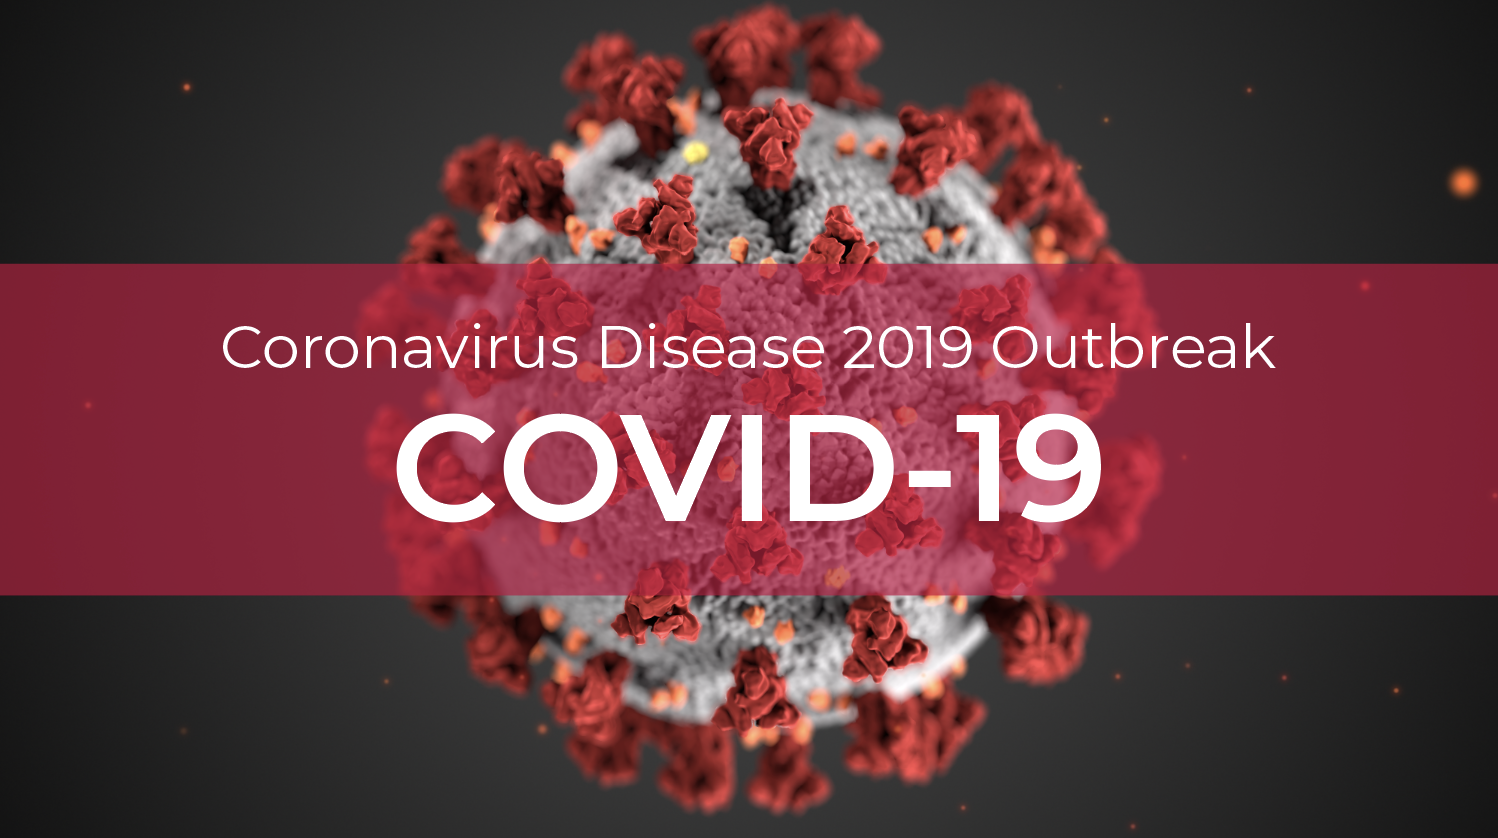 A poster on coronavirus disease 2019 outbreak